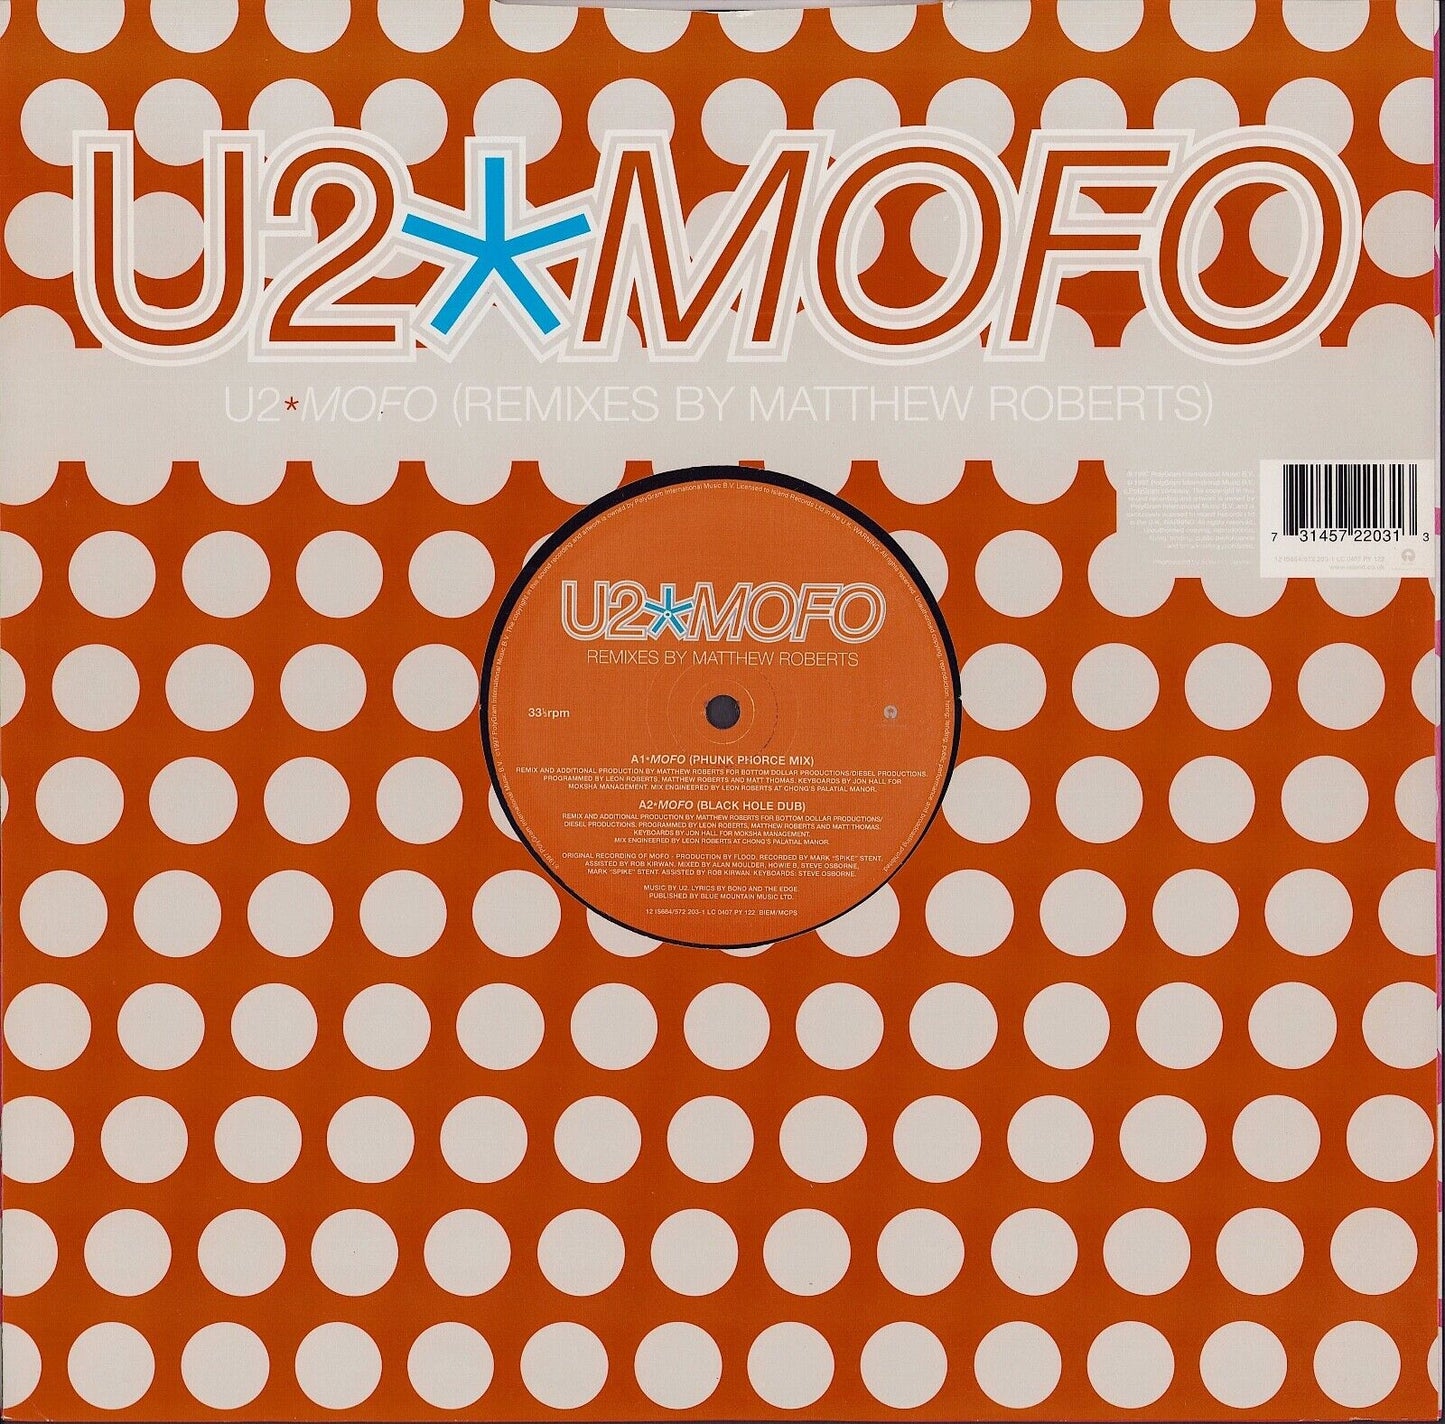 U2 ‎- MOFO Remixes By Matthew Roberts, Roni Size & Romin Vinyl 12"